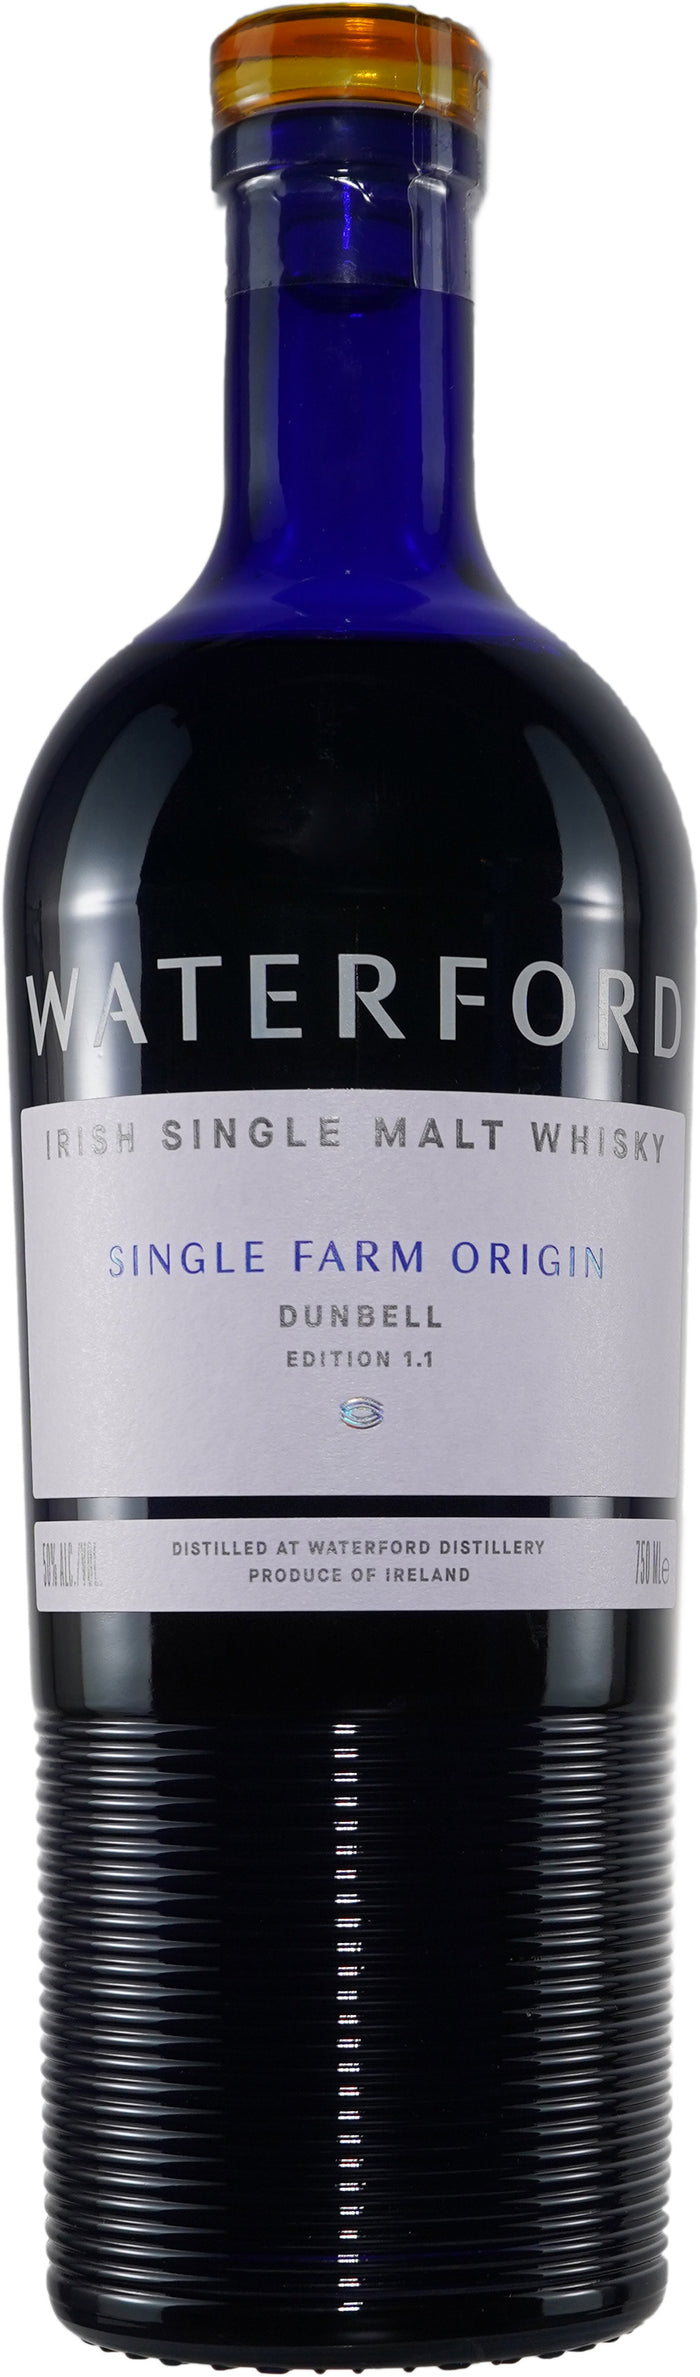 Waterford Single Farm Origin Dunbell Edition 1.1 Irish Single Malt Whiskey